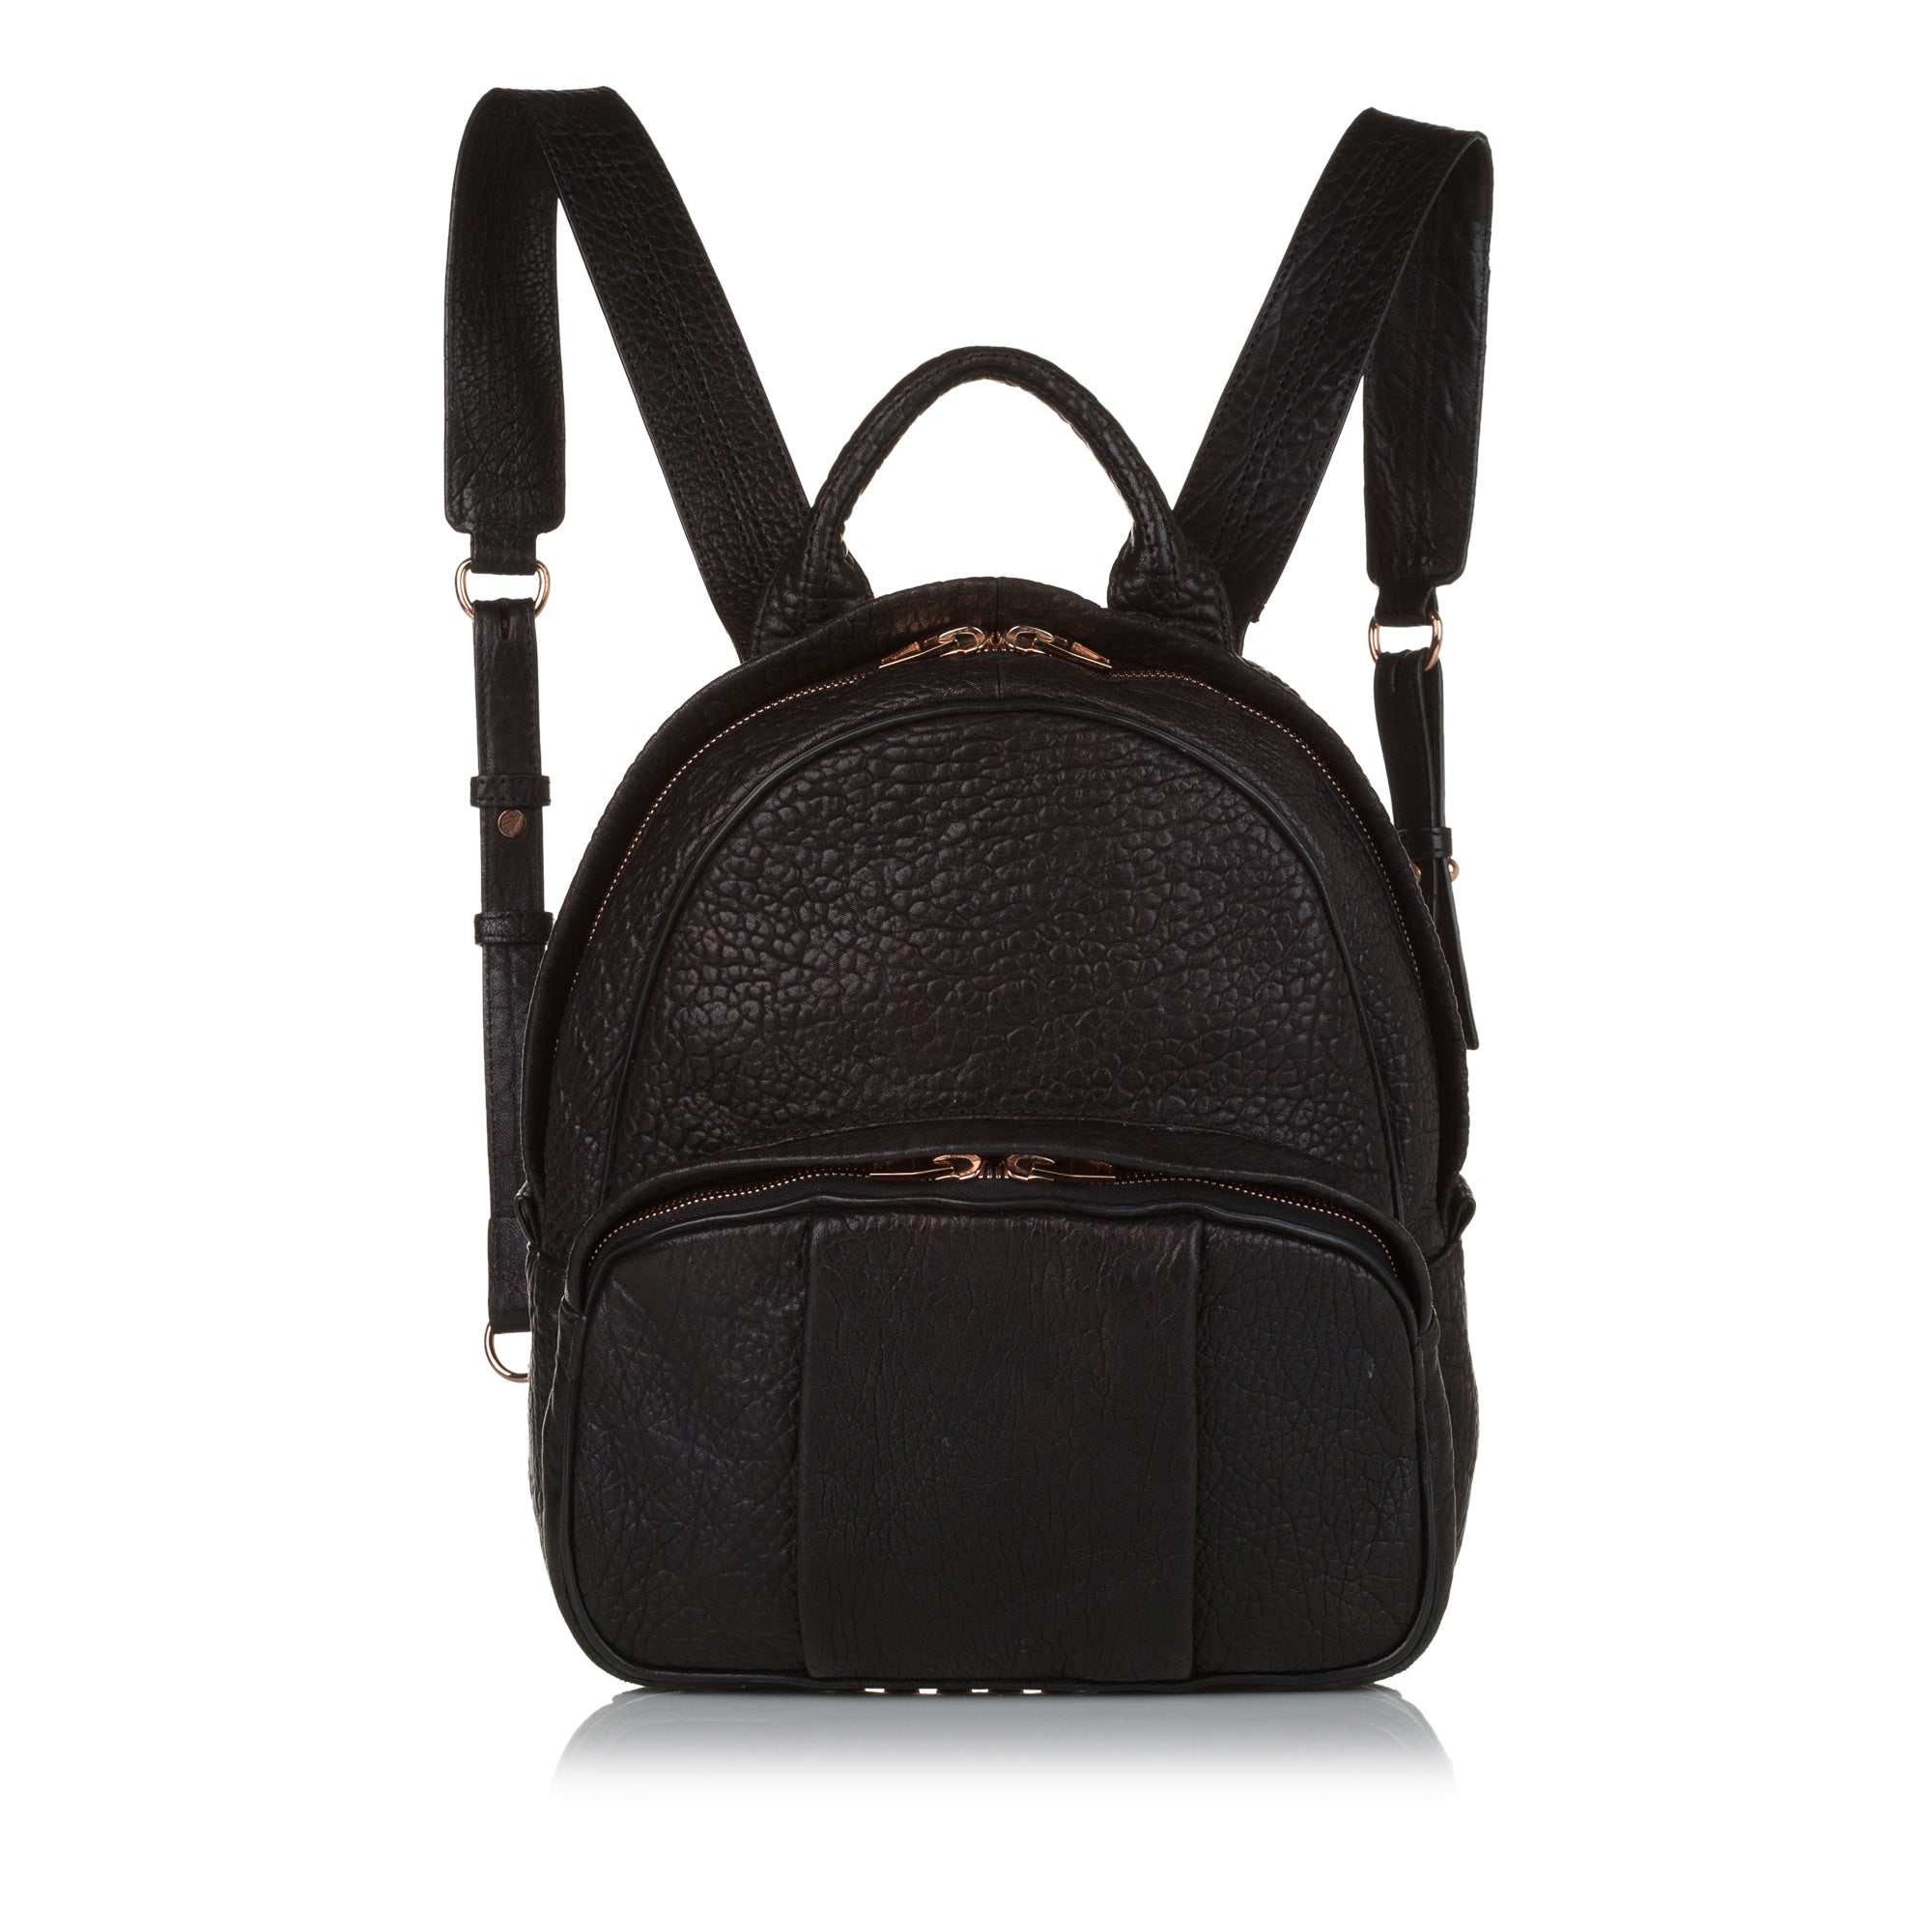 Black Dumbo Leather Backpack